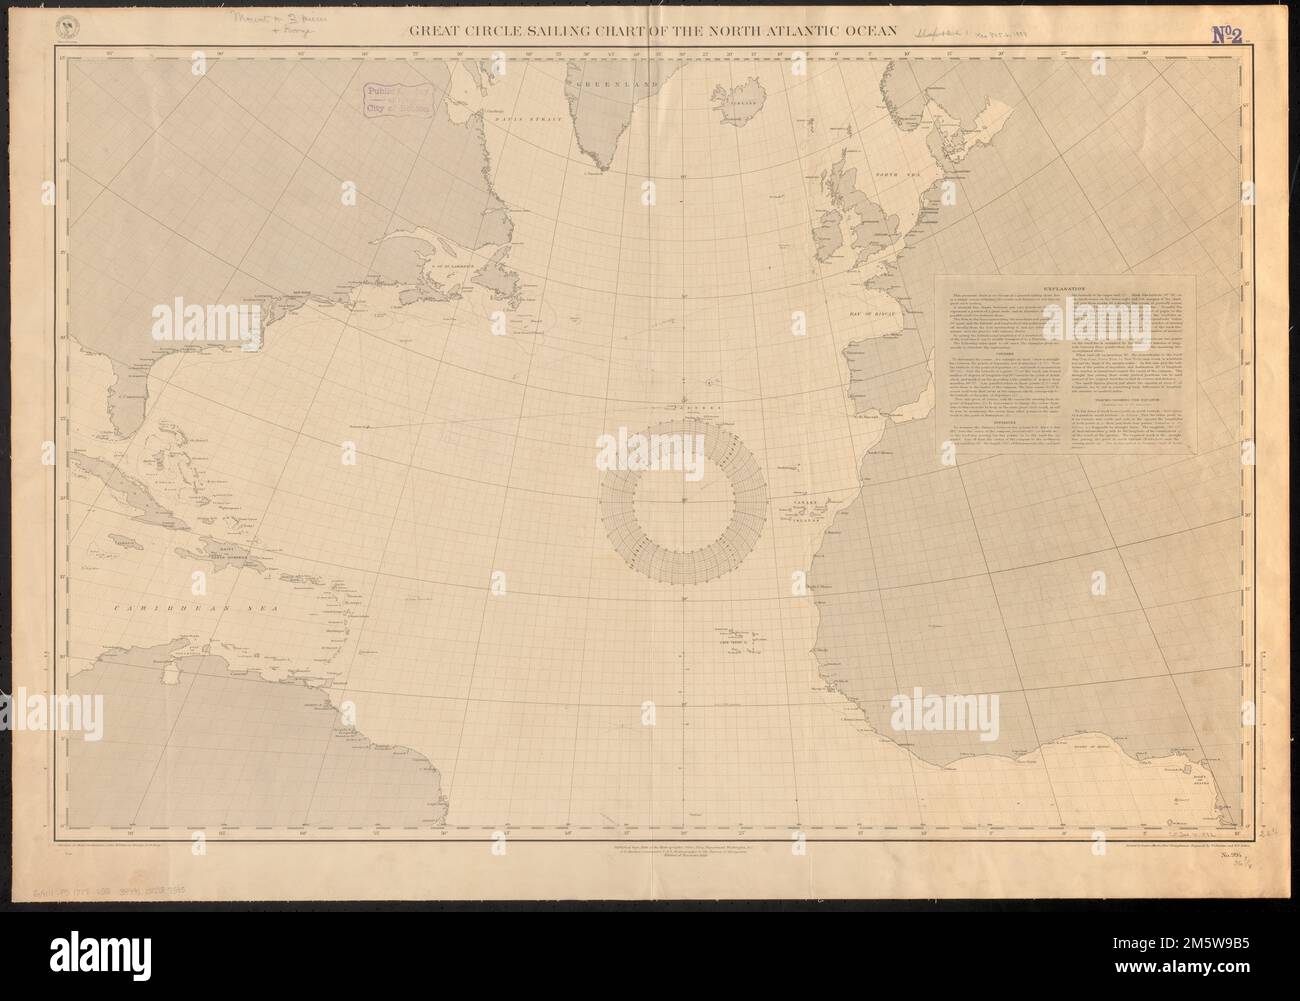 Great circle sailing chart of the North Atlantic Ocean. Includes explanation.... , Atlantic Ocean Stock Photo